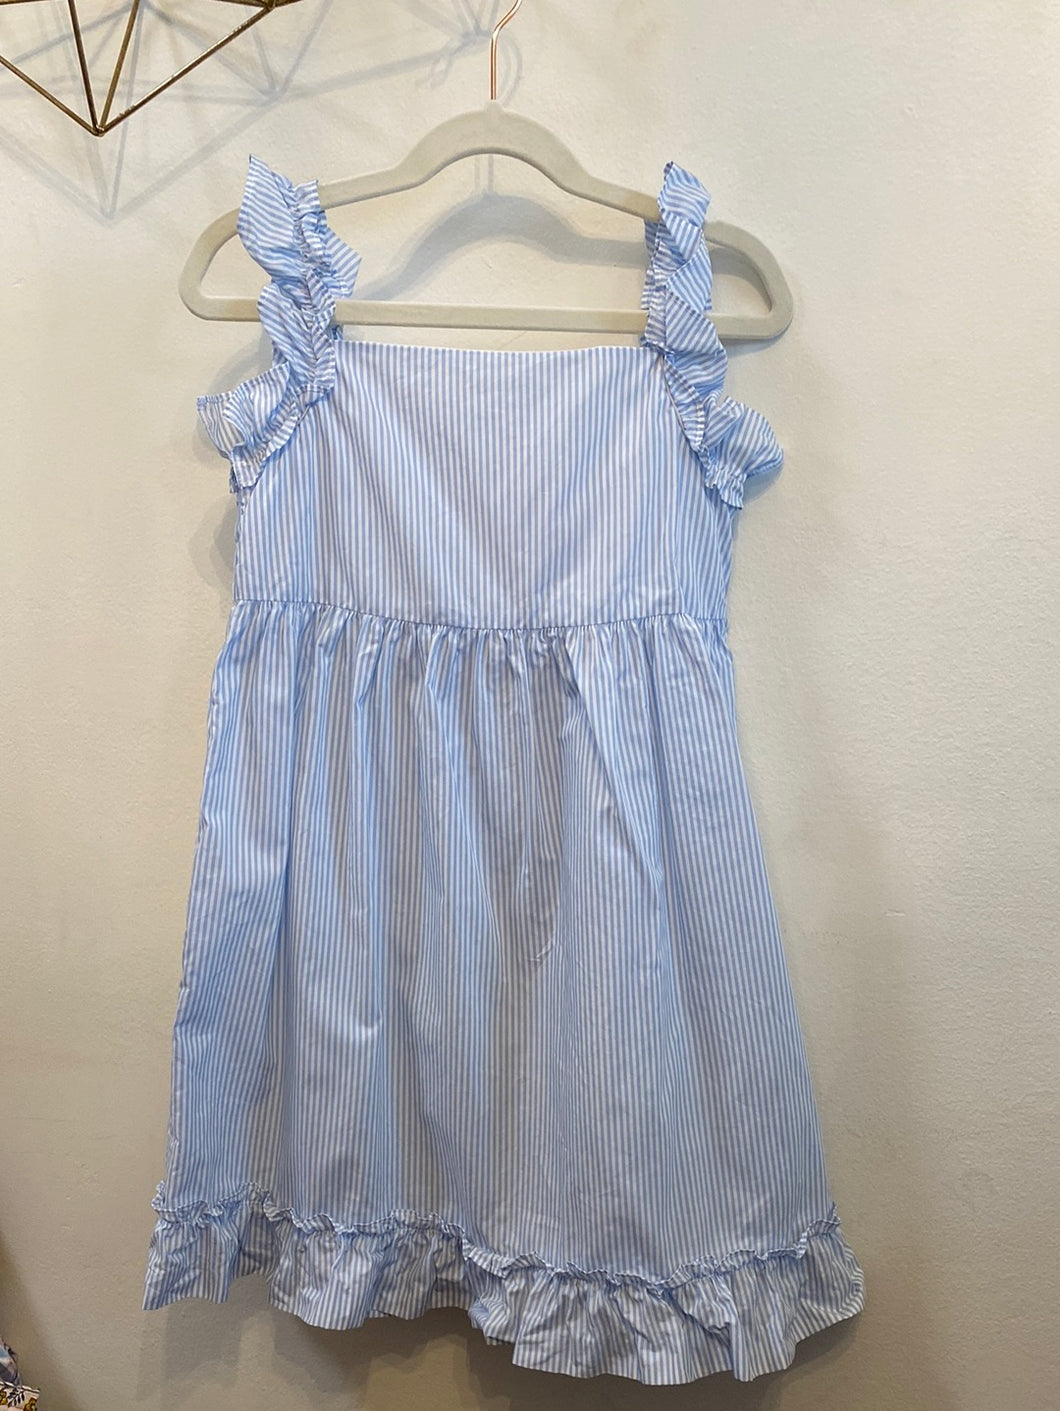 Edgehill Collection size 6 dress